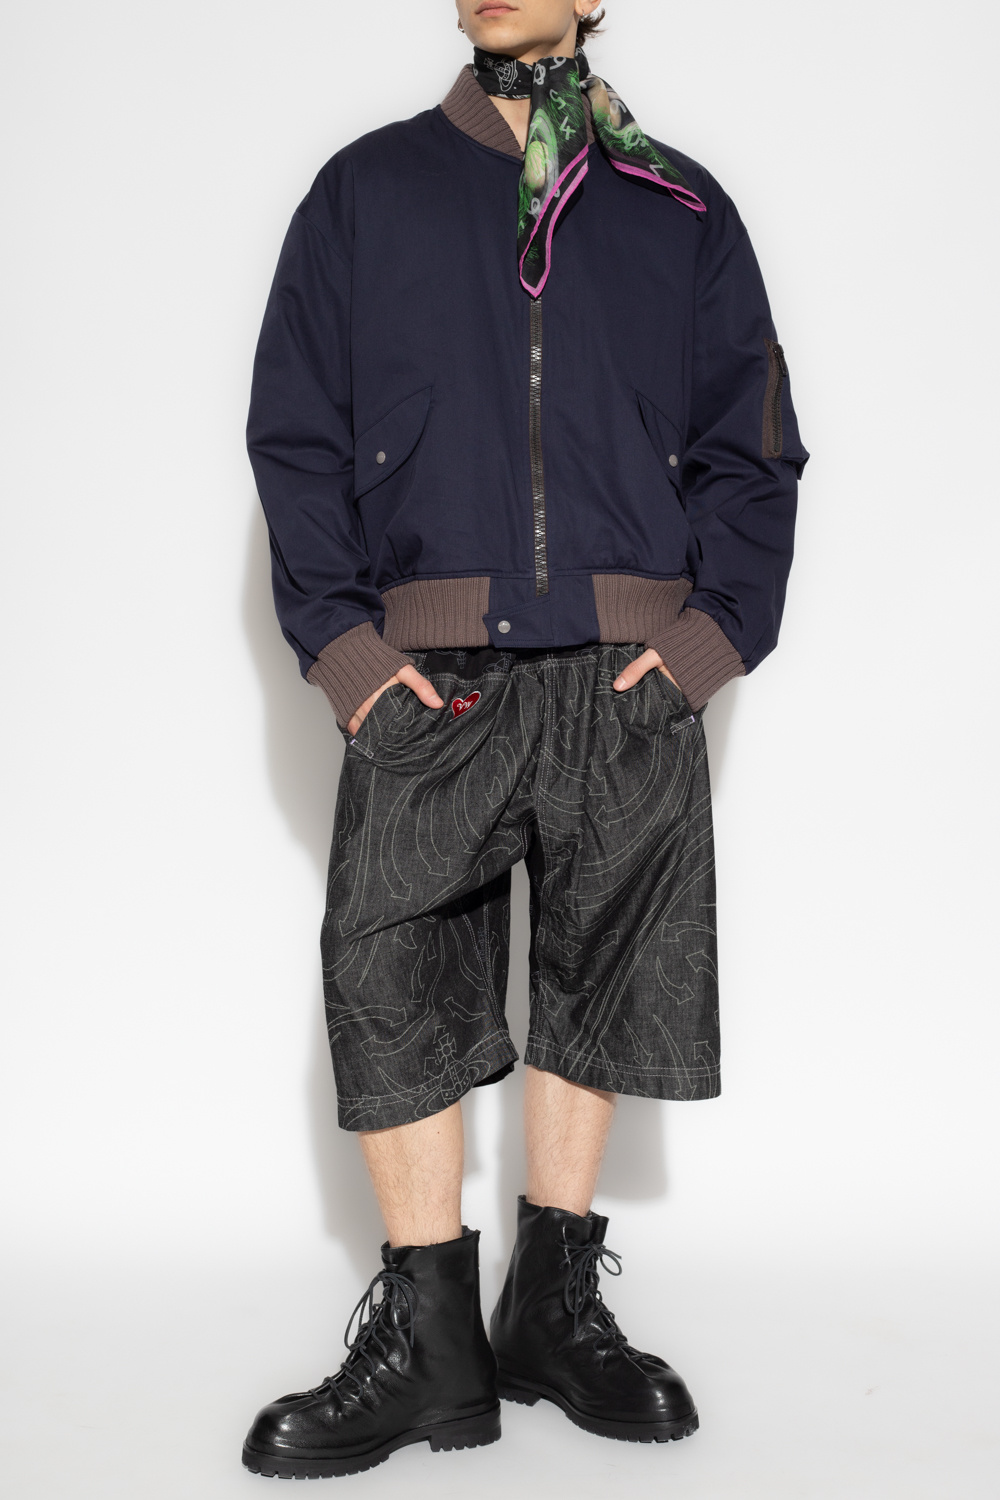 Vivienne Westwood Patterned shorts